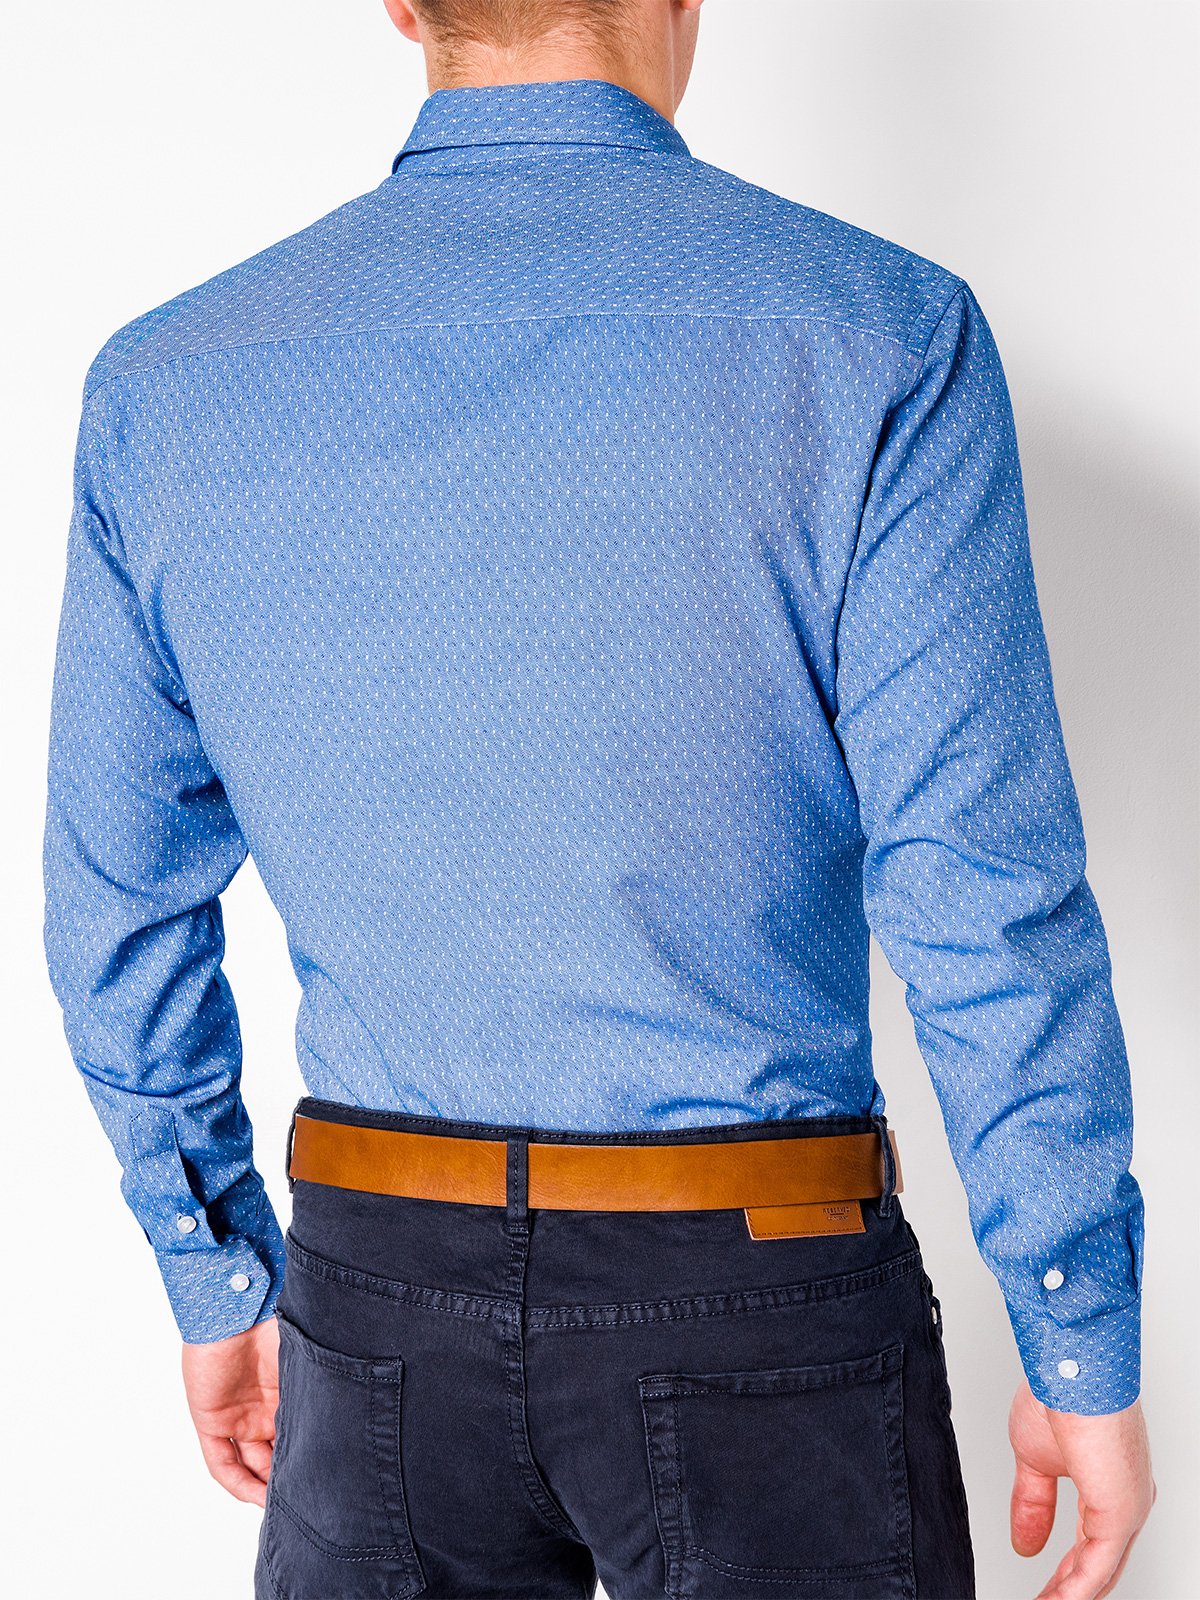 Men's elegant shirt with long sleeves - blue K464 | MODONE wholesale ...